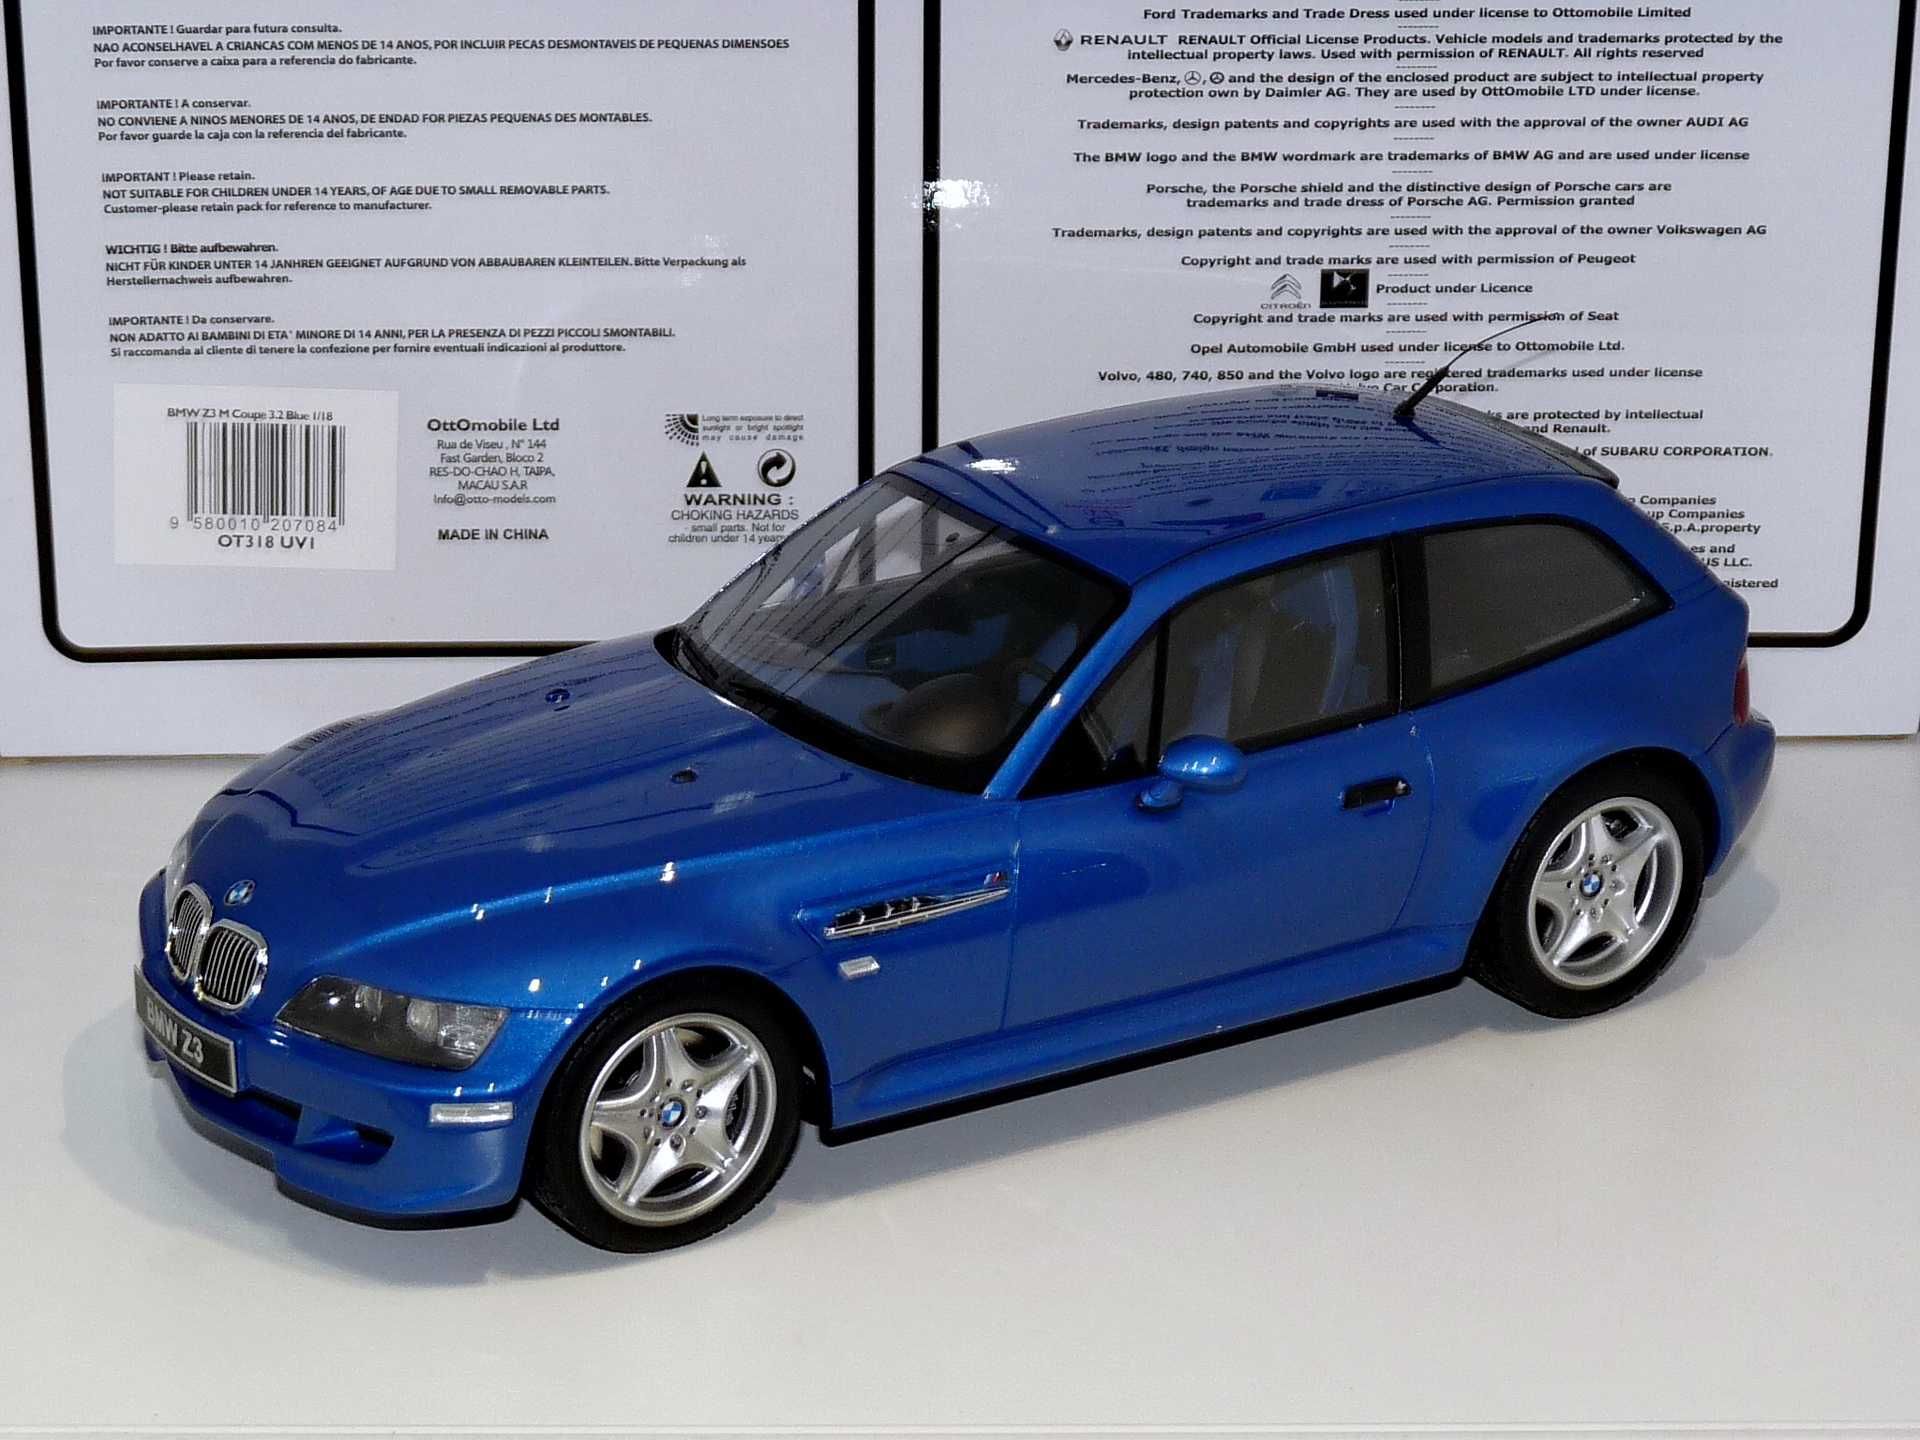 BMW Z3 M Coupe 3.2 Blue 1999 (OT318) OttO 1/18